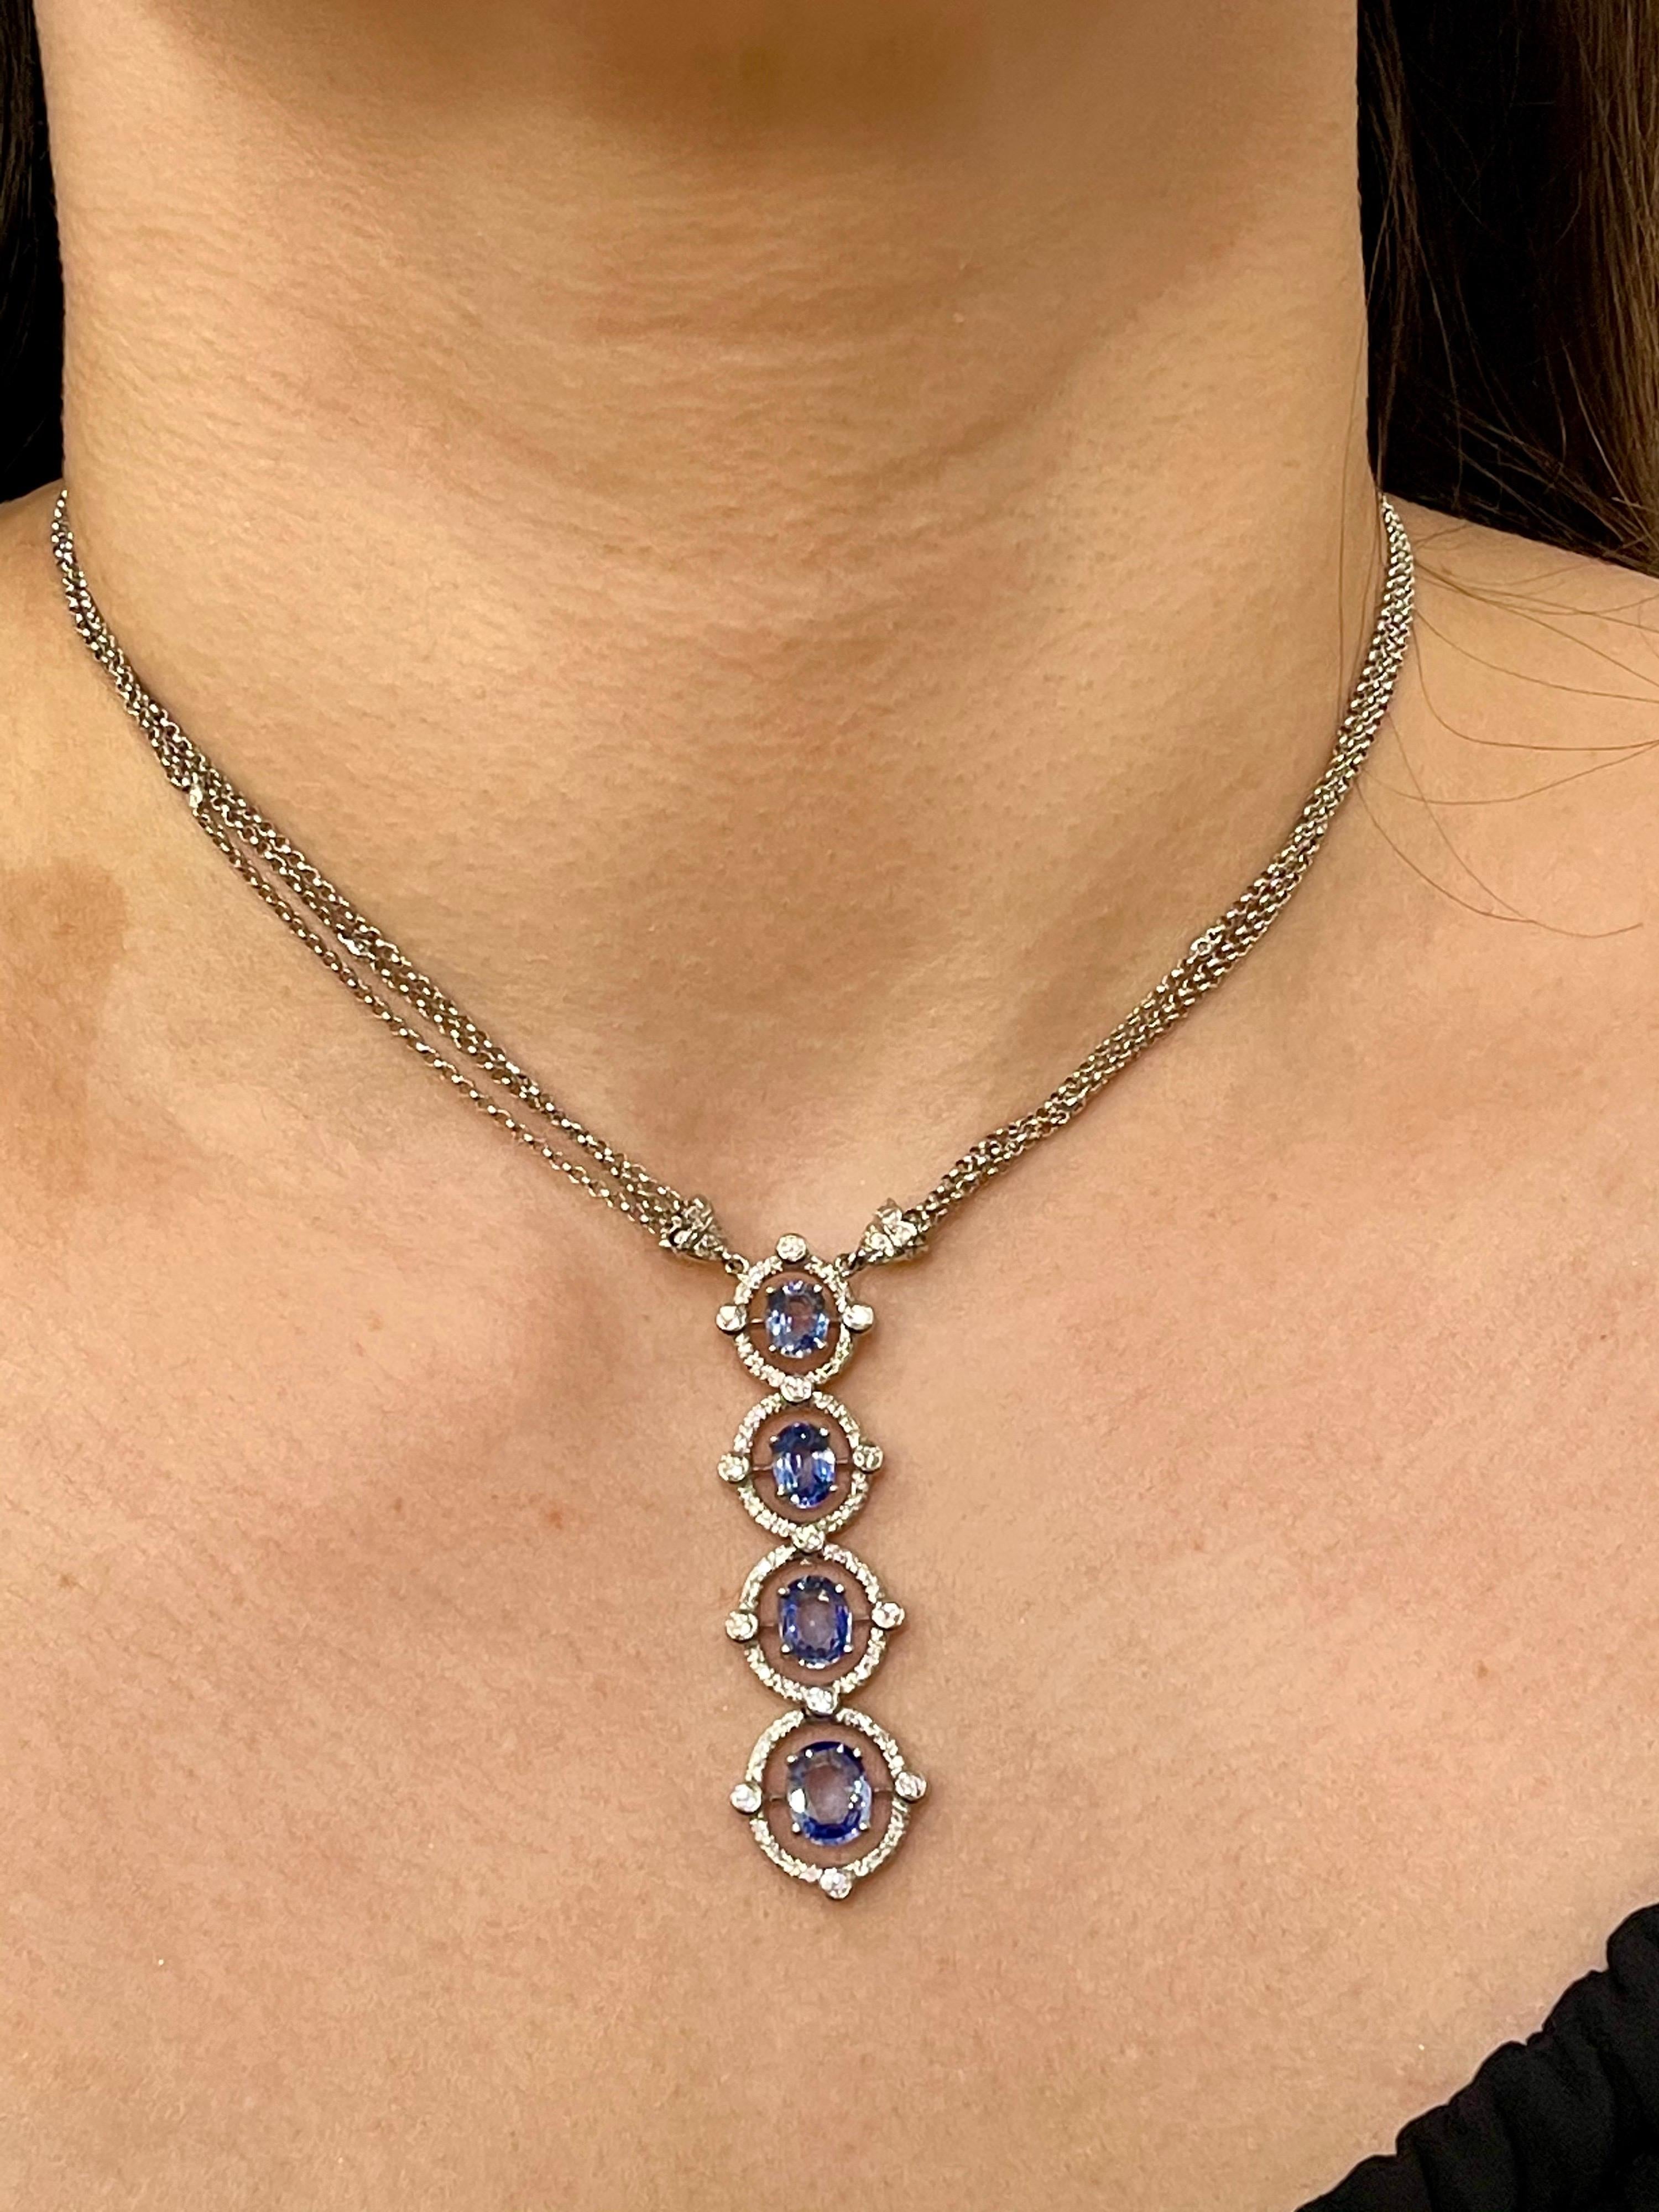 7 Carat Sapphire and Diamond Pendant or Necklace 18 Karat Gold Multi Chain 5